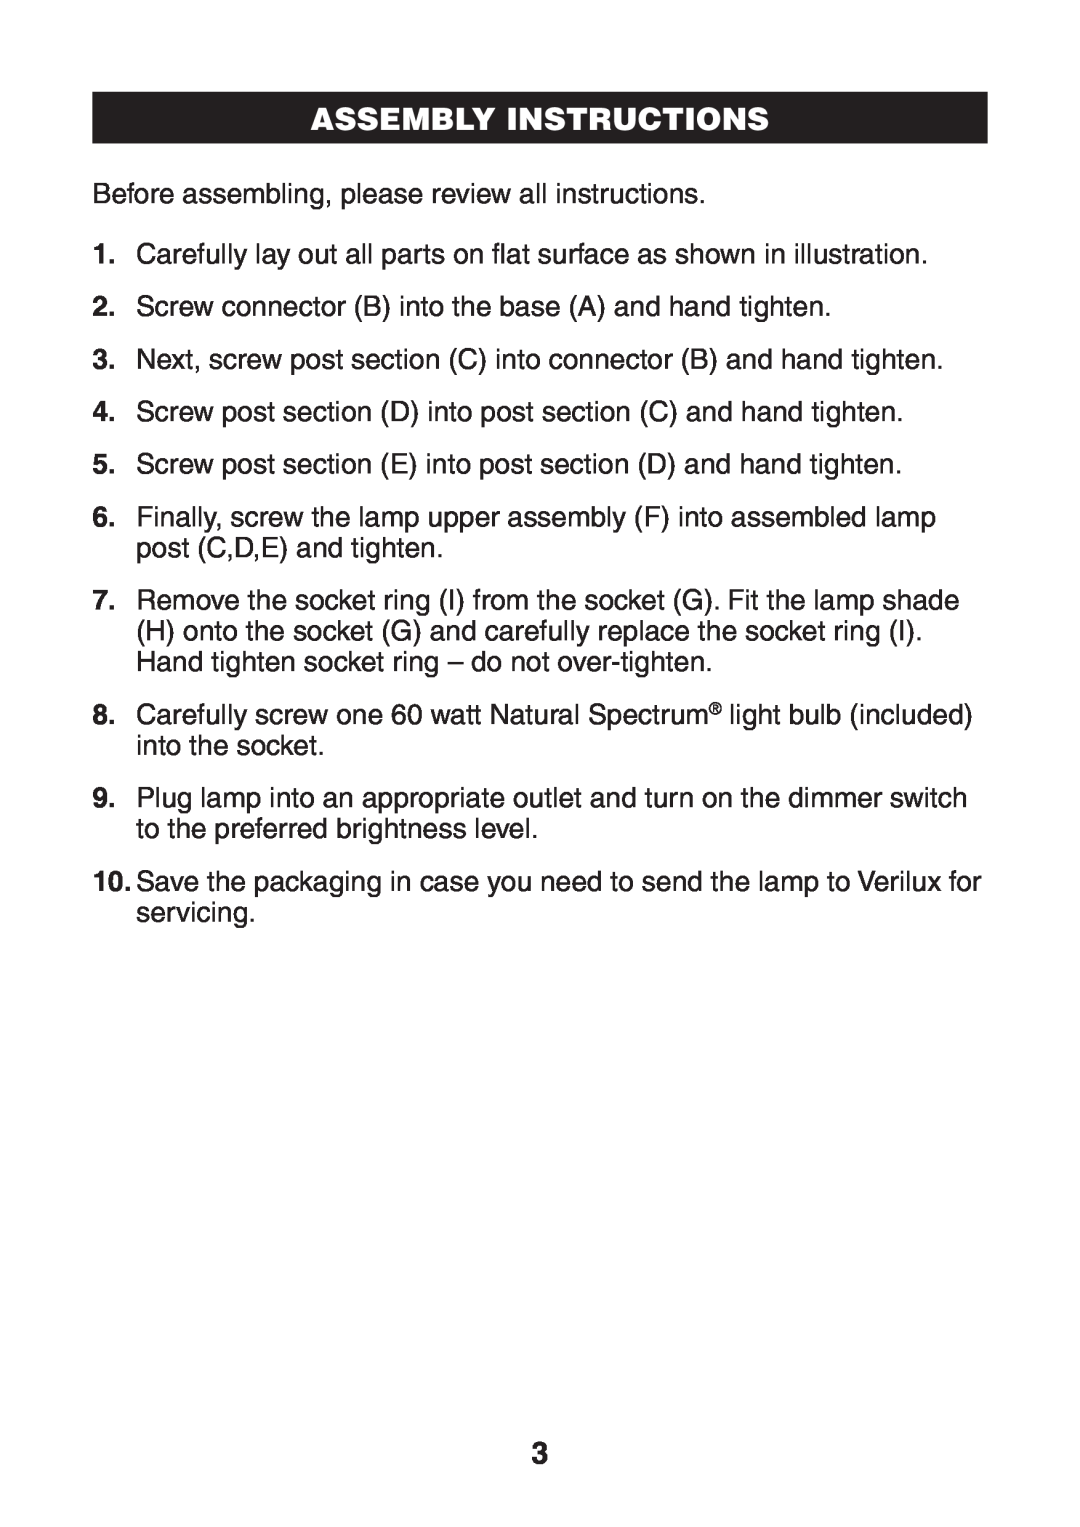 Verilux VF04 manual Assembly Instructions 